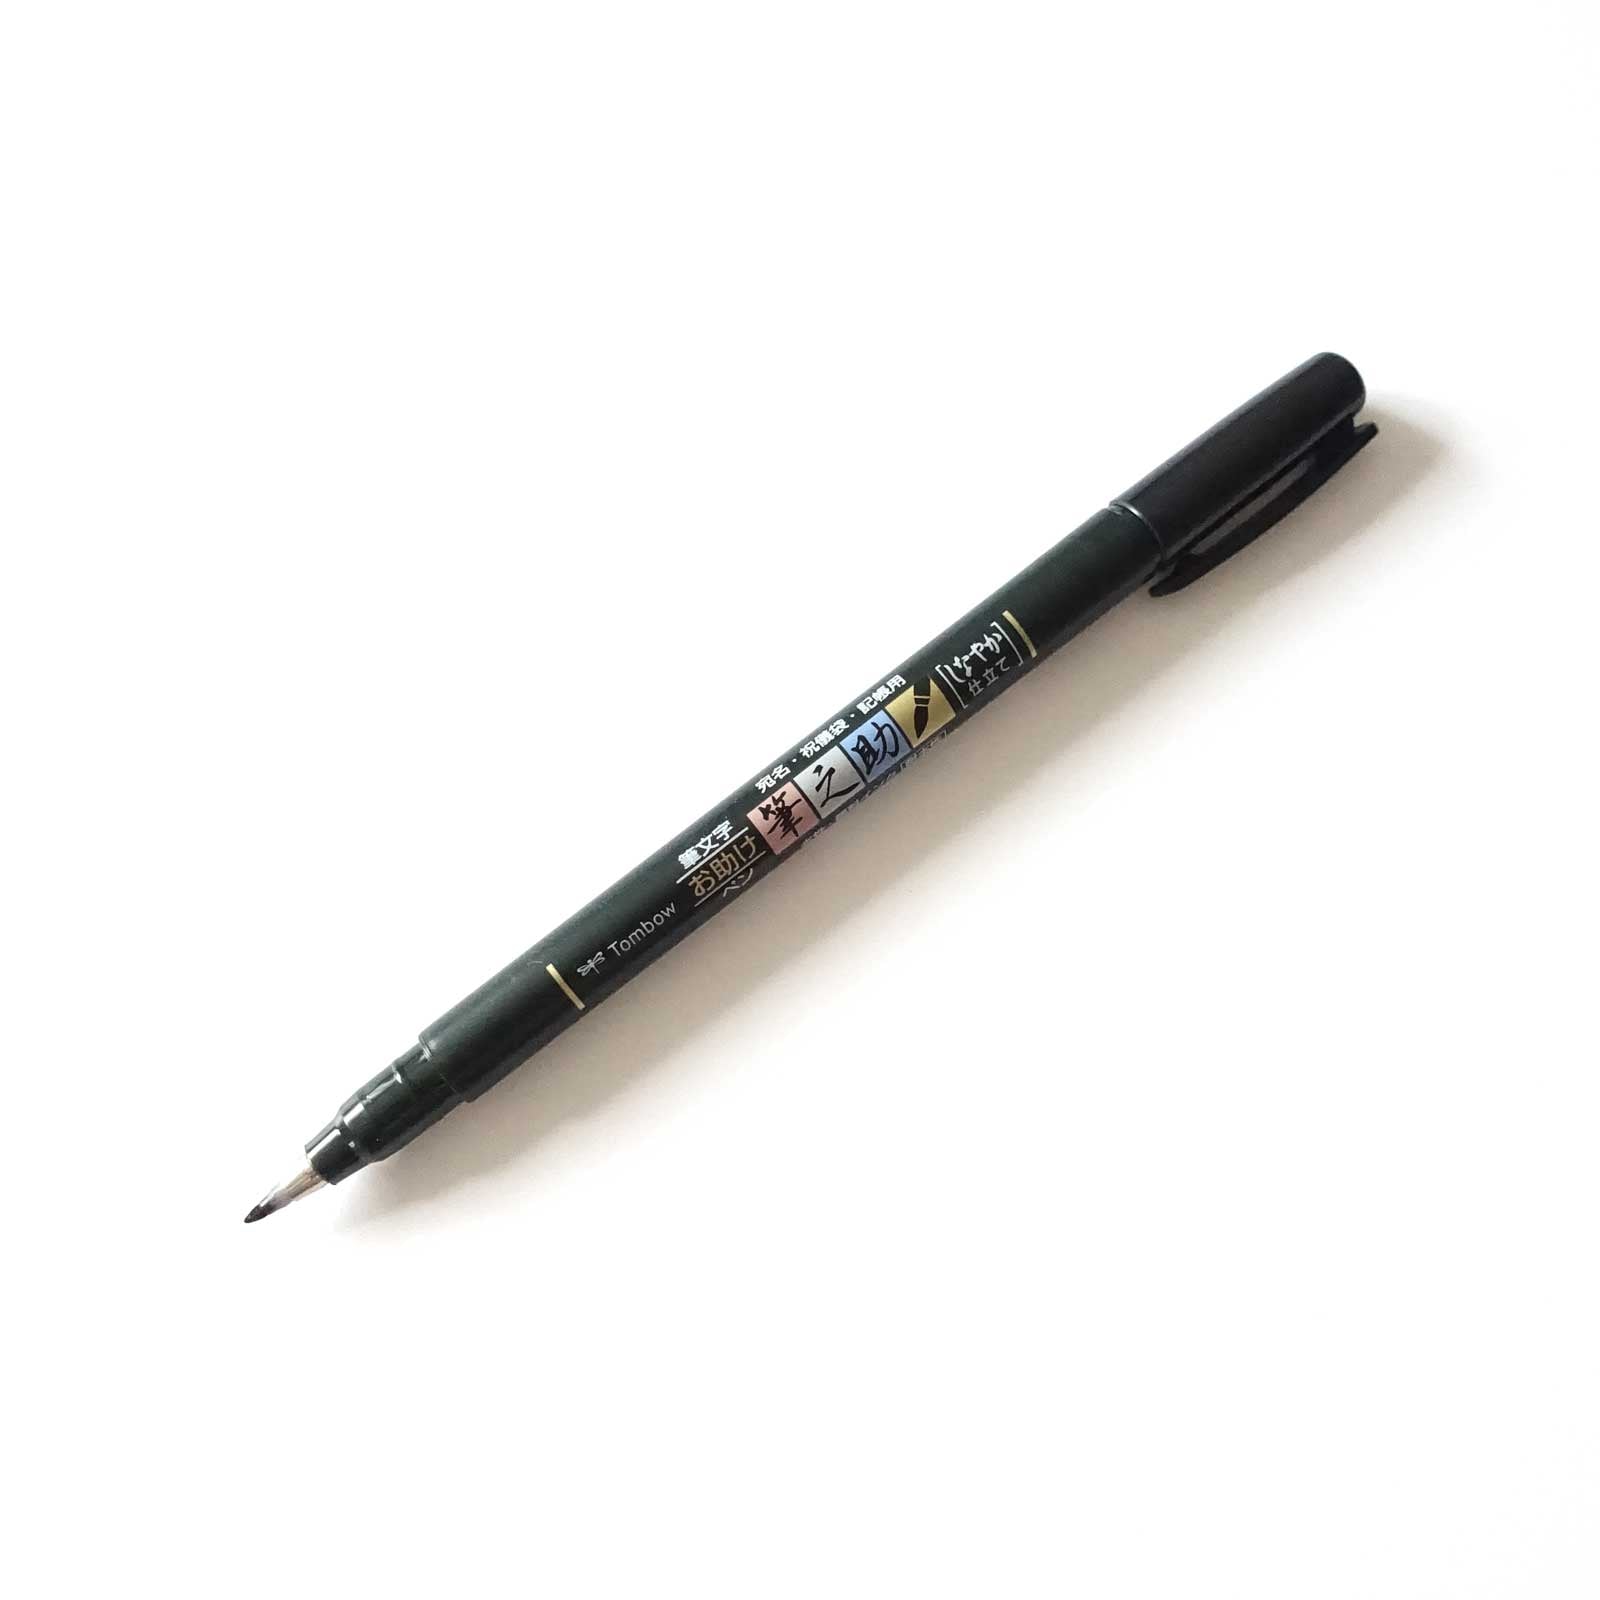 Tombow fudenosuke soft brush pen